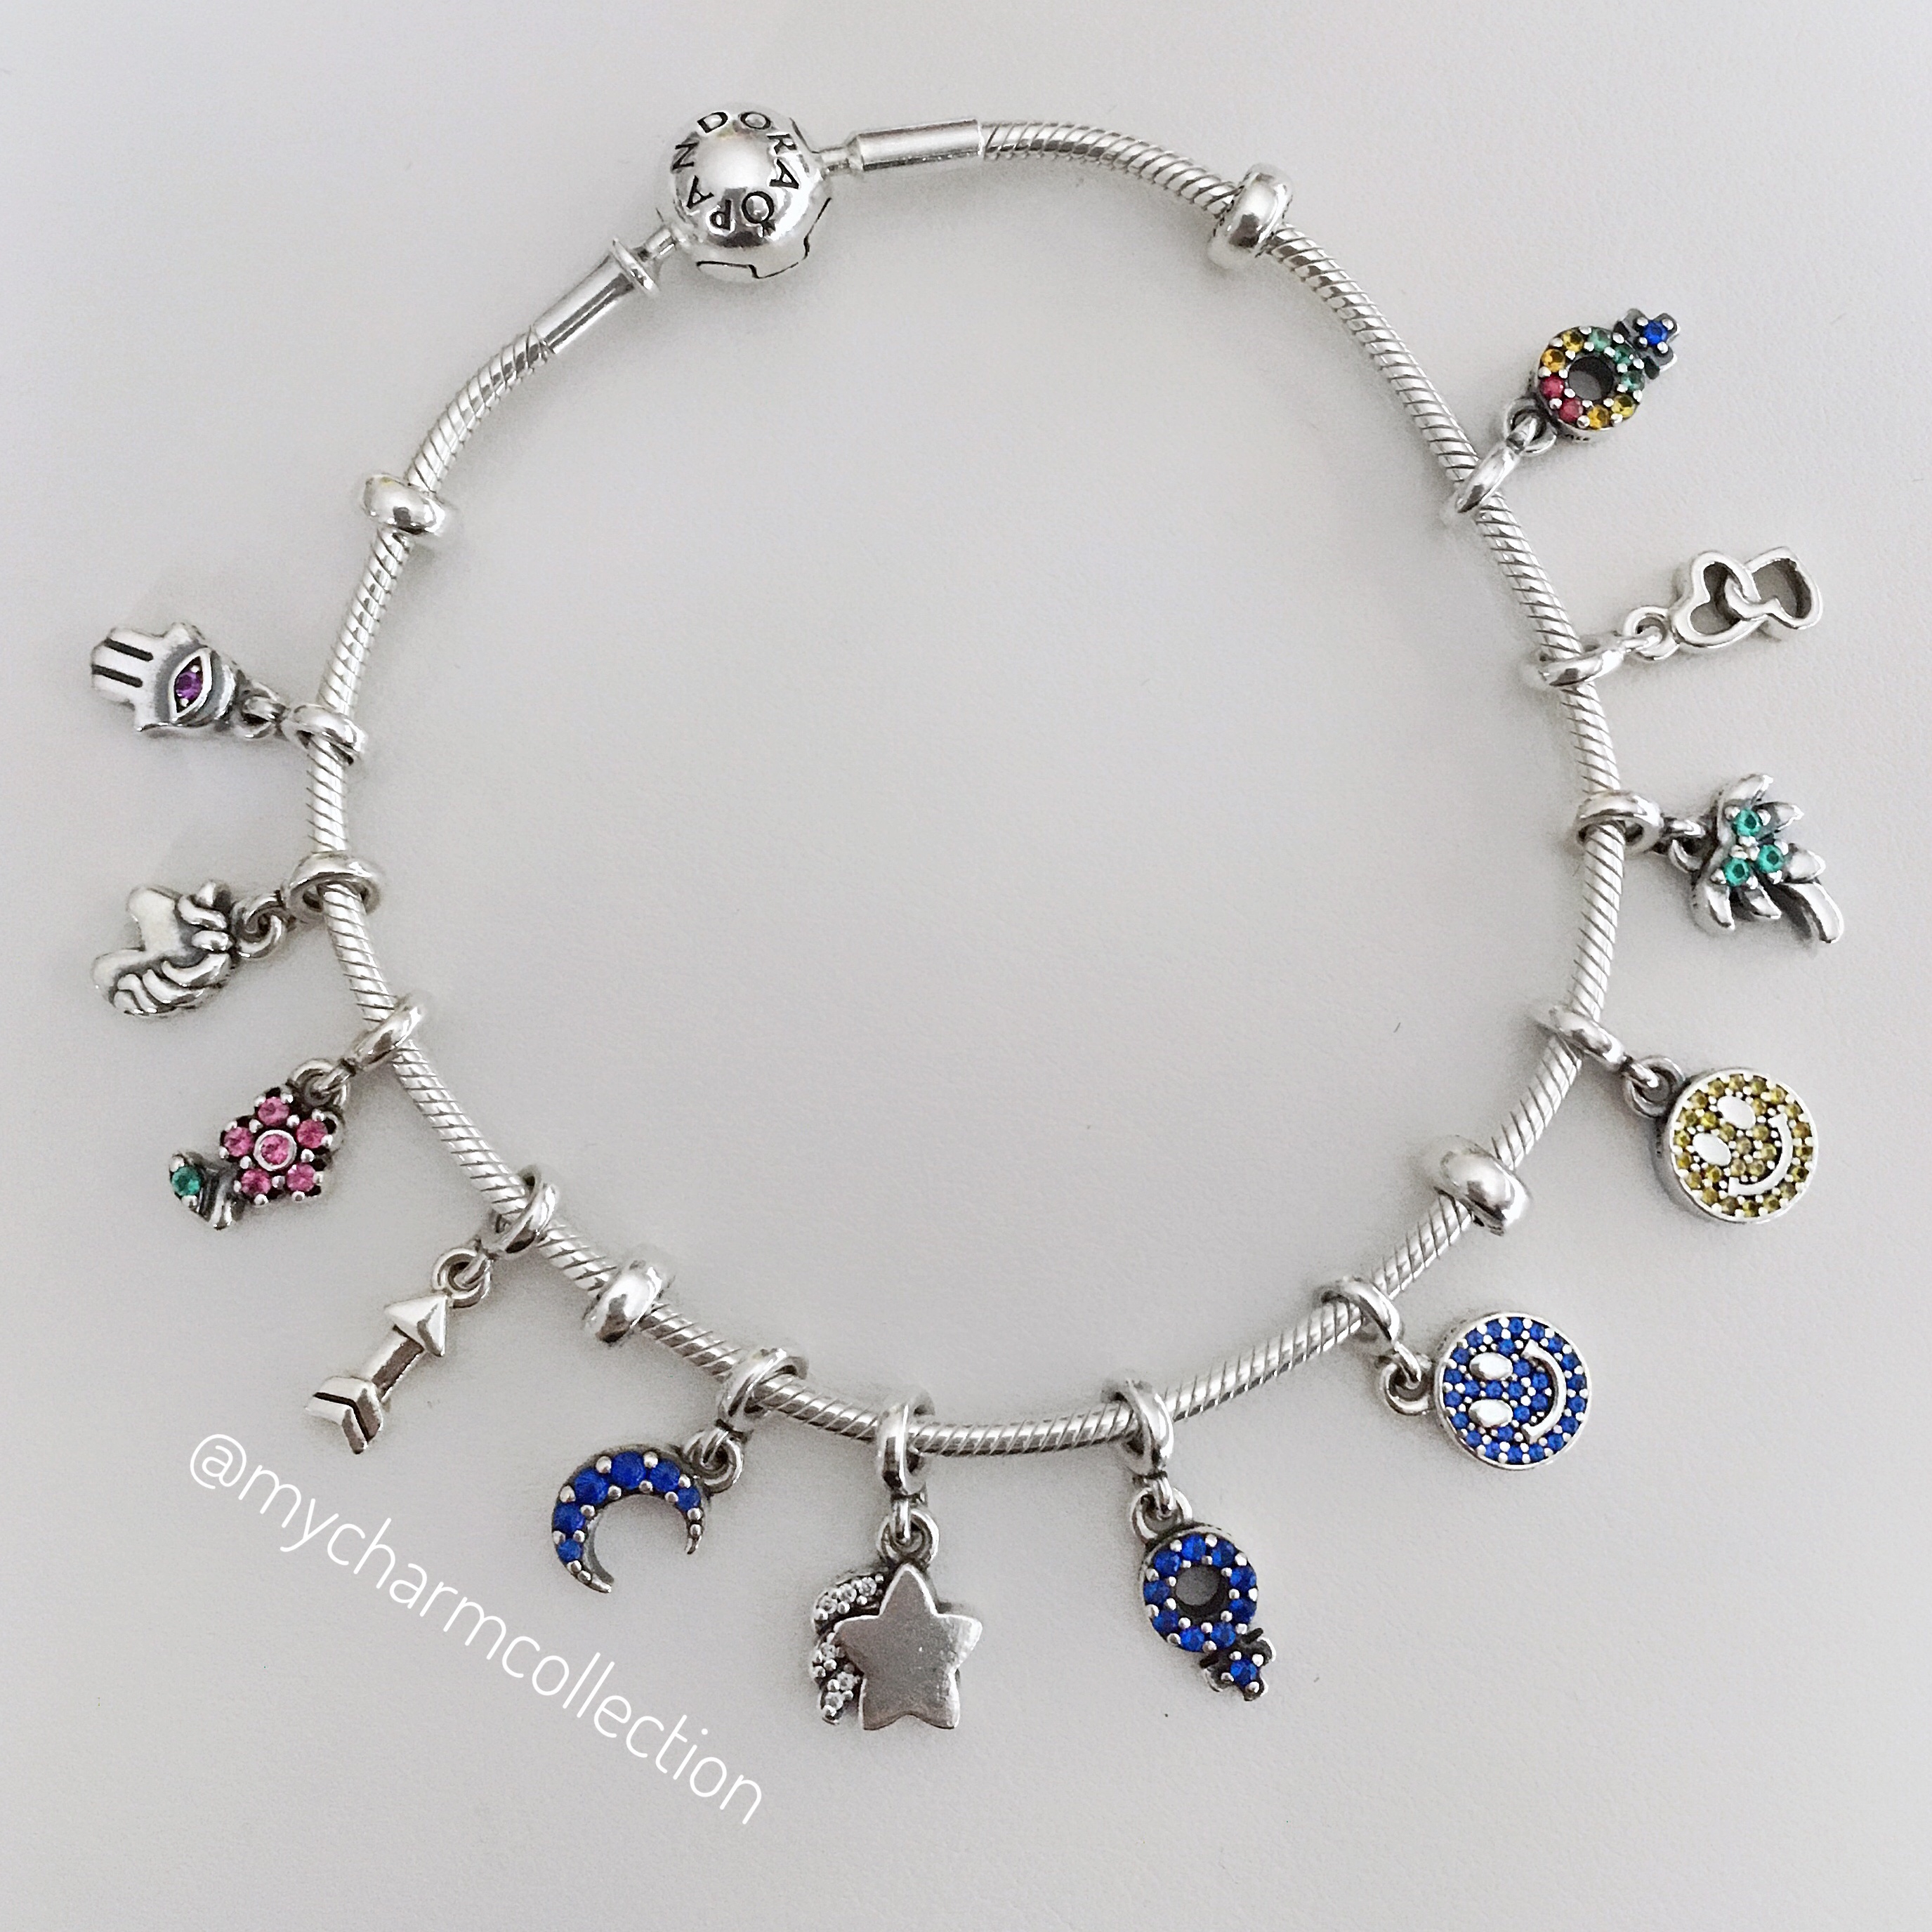 Pandora ME Small-Link Chain Bracelet, Sterling silver